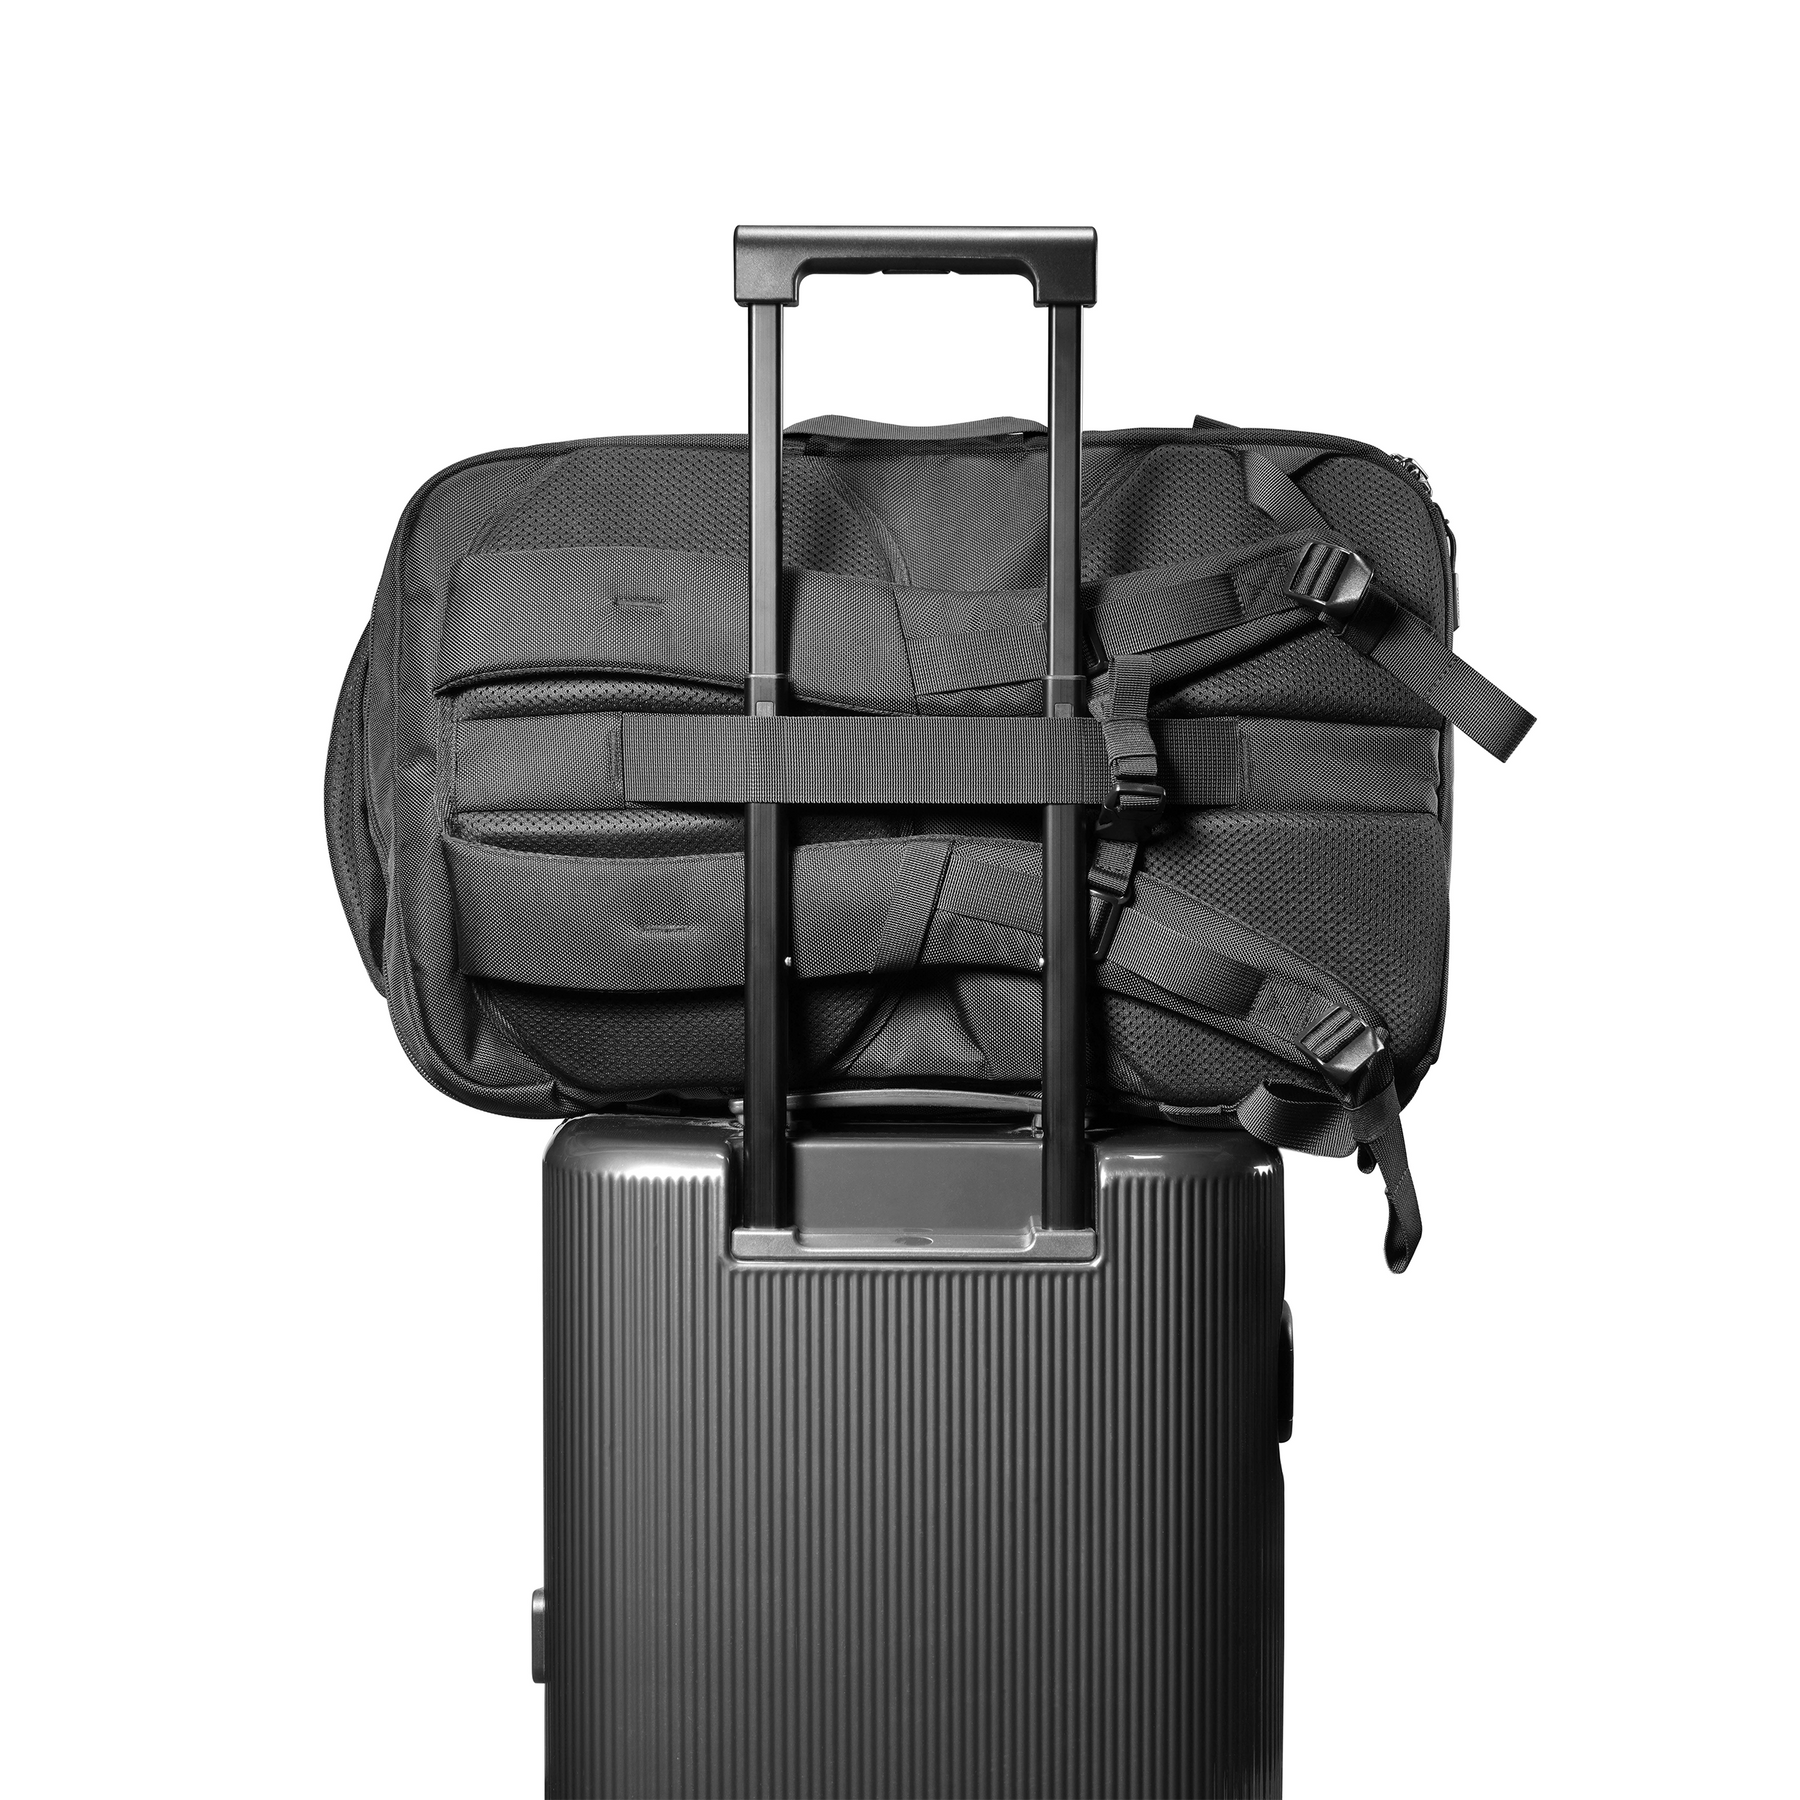 tomtoc 17 Inch Travel Laptop / Backpack Laptop - Black